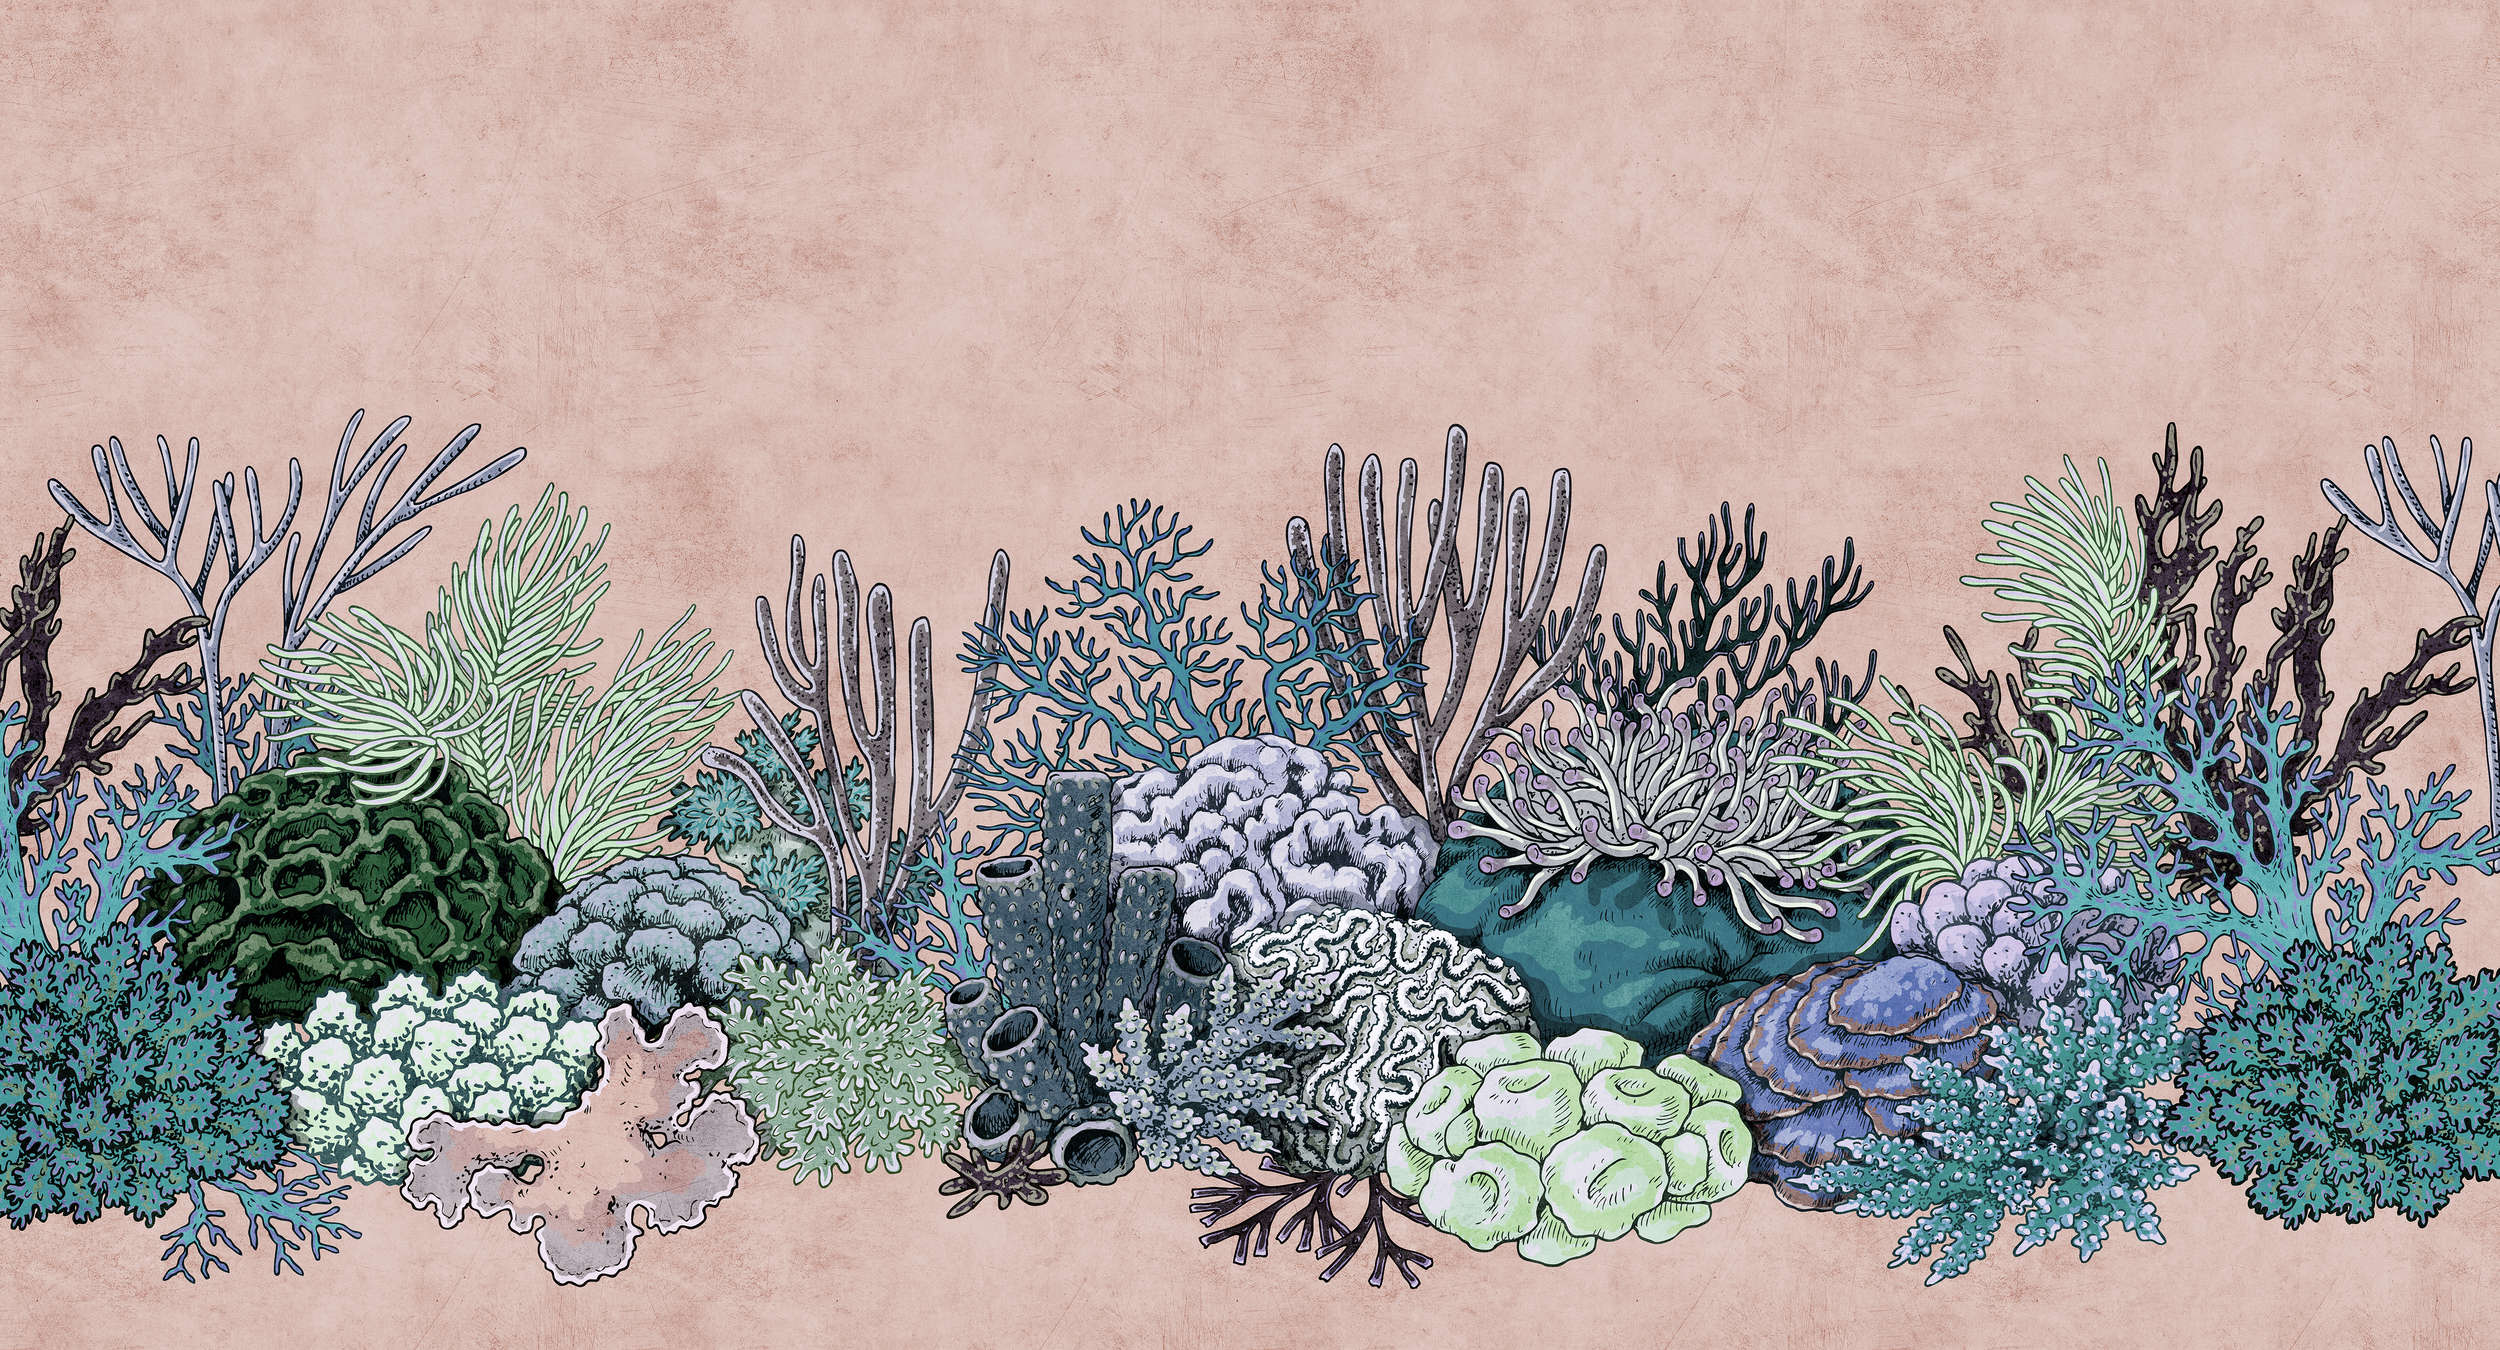             Octopus's Garden 2 - Coral wallpaper in blotting paper structure in drawing style - Green, Pink | Matt smooth fleece
        